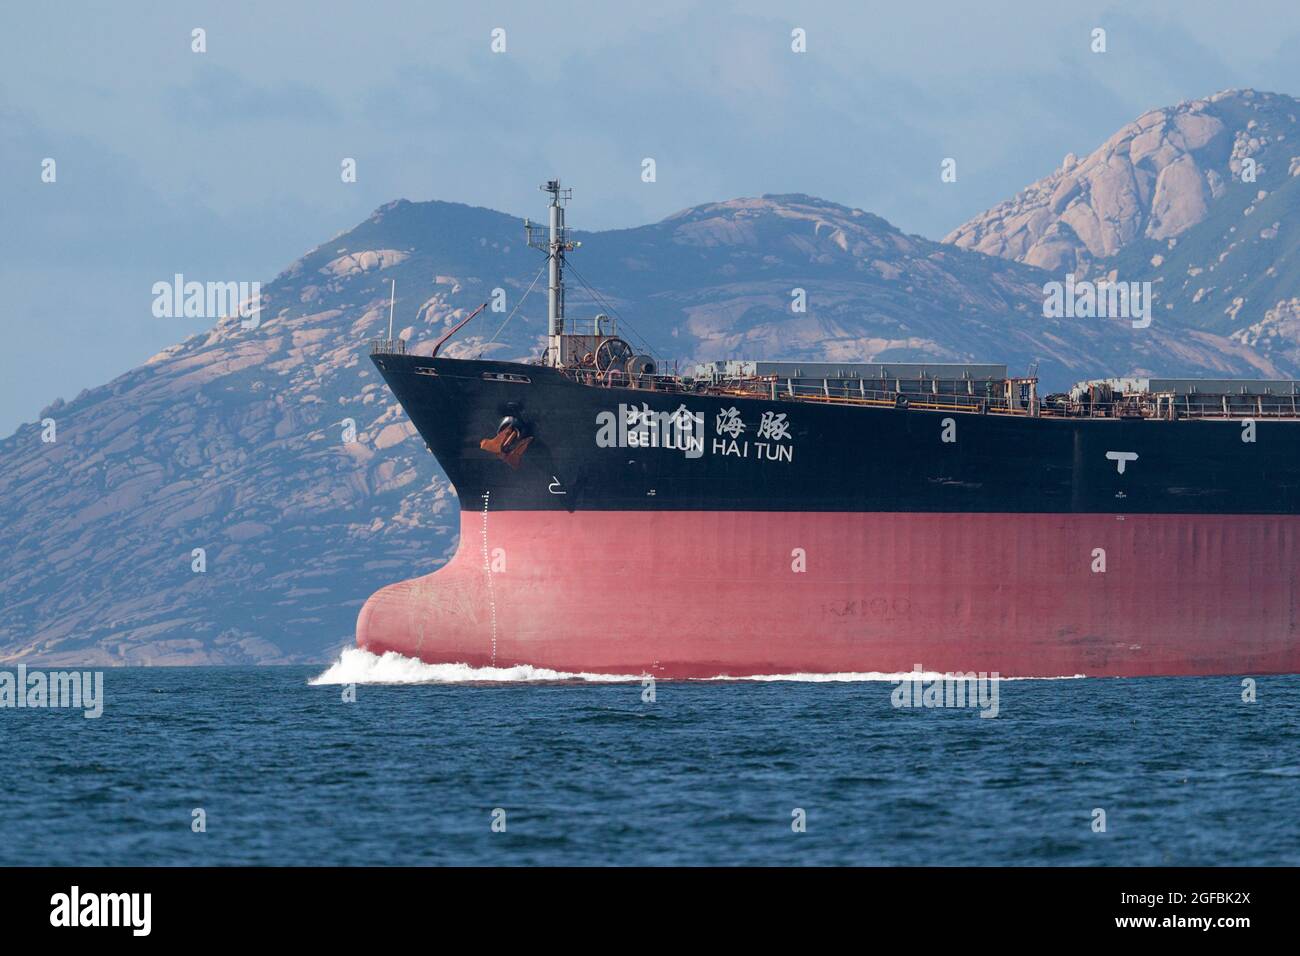 Bulk Carrier Bei Lun Hai Tun, IMO 9146986, Hong Kong southern waters, South China Sea, south of Hong Kong, China 22nd August 2021 Stock Photo